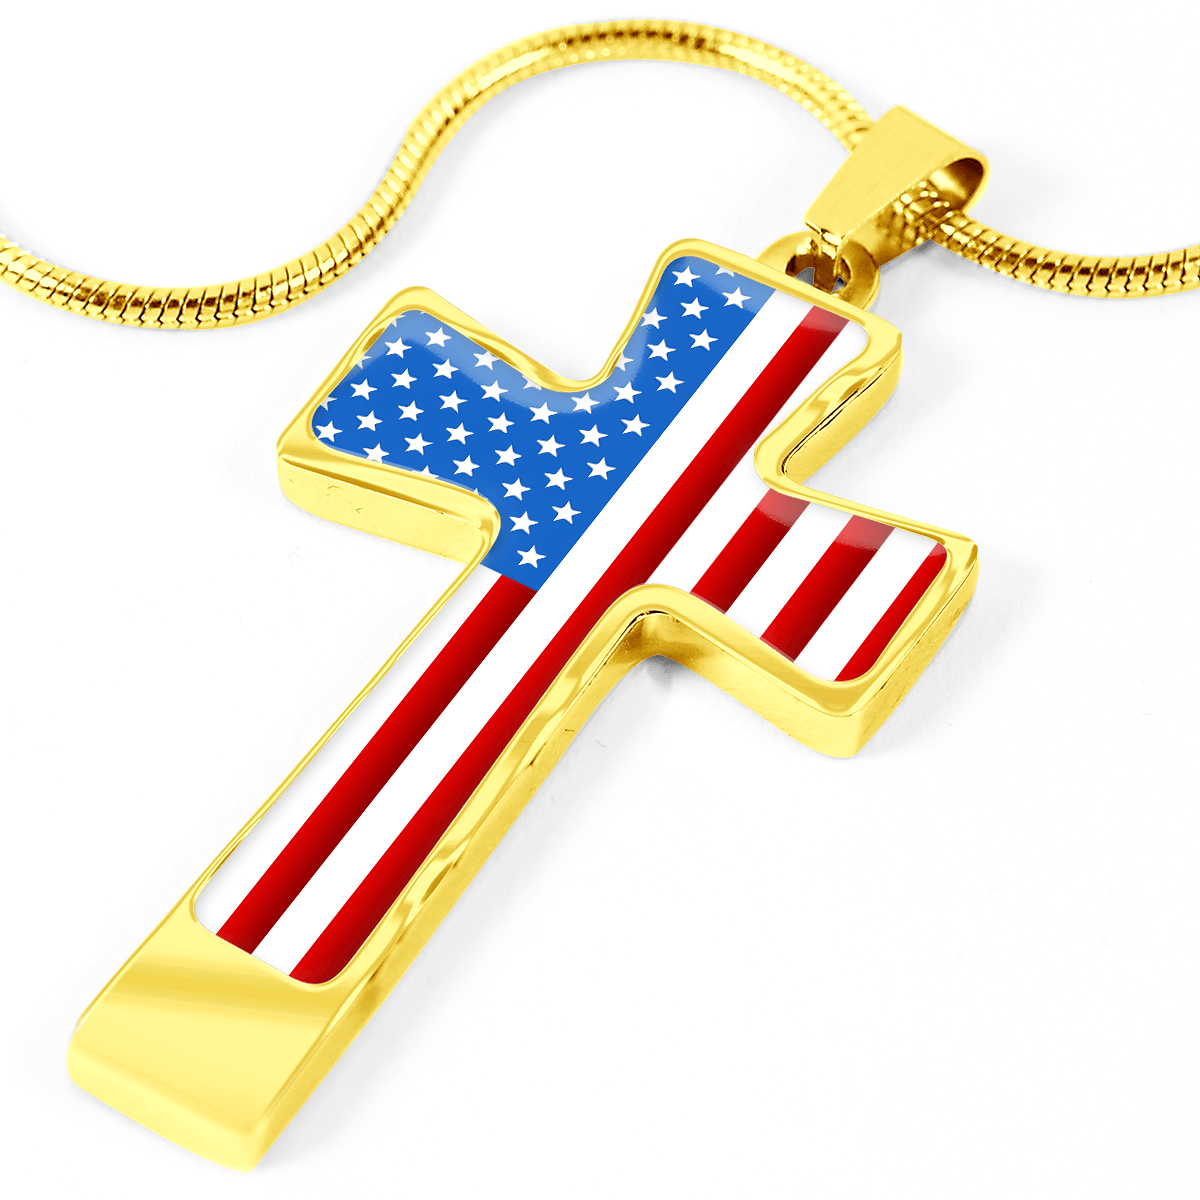 Women's Patriotic American Flag Cross Necklace - Heroic Defender